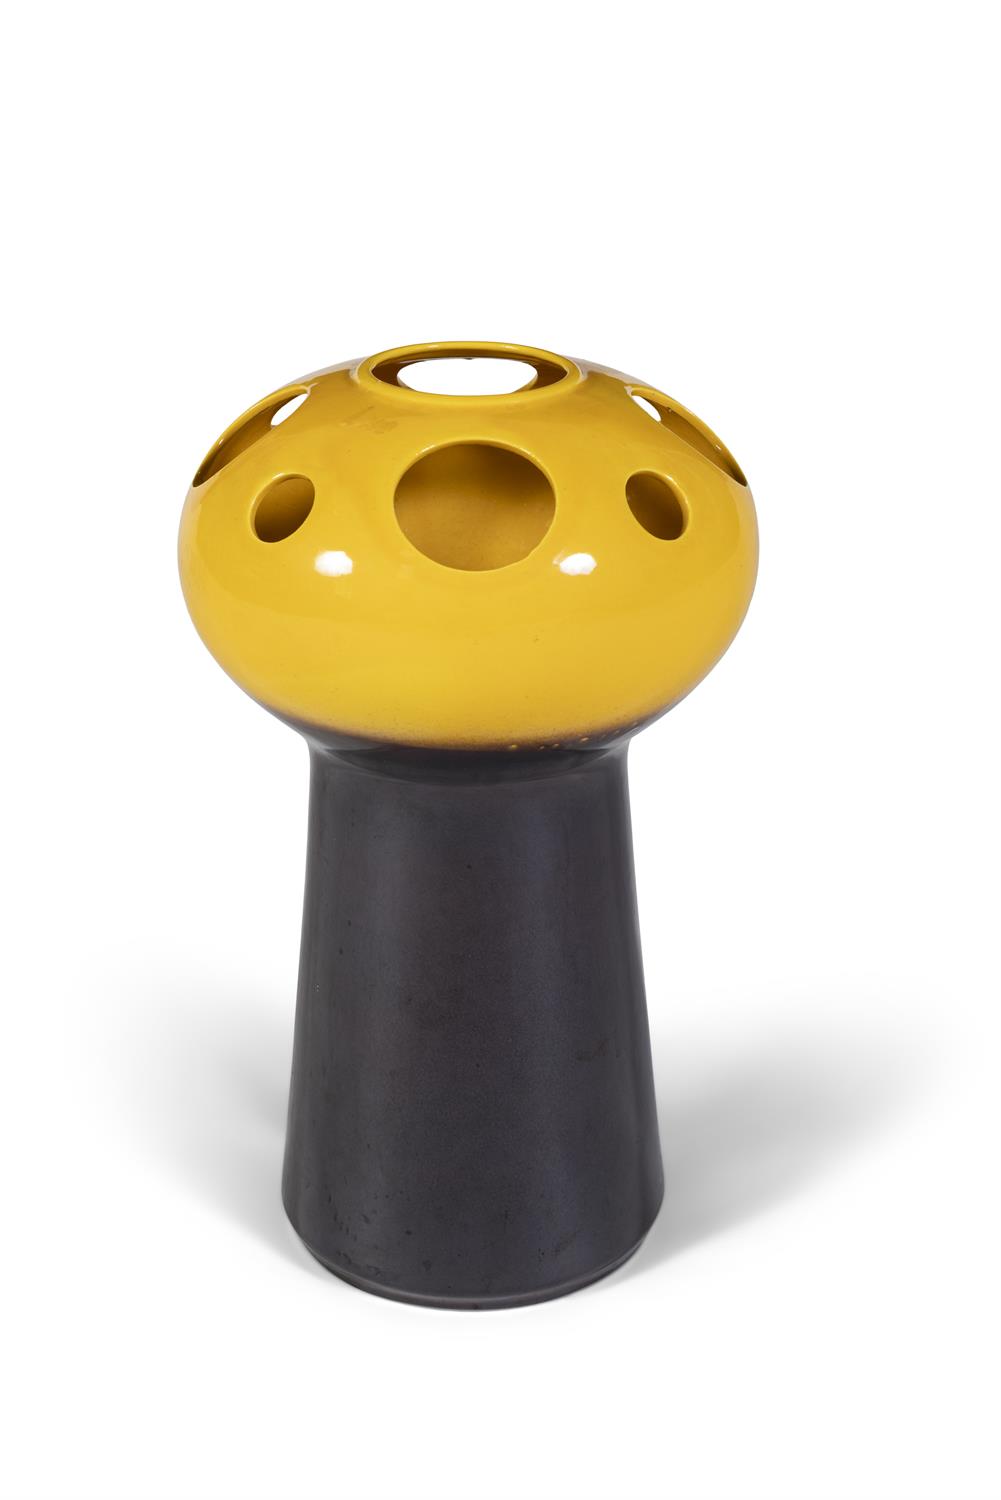 VASE A yellow and black ceramic vase. - Image 2 of 6